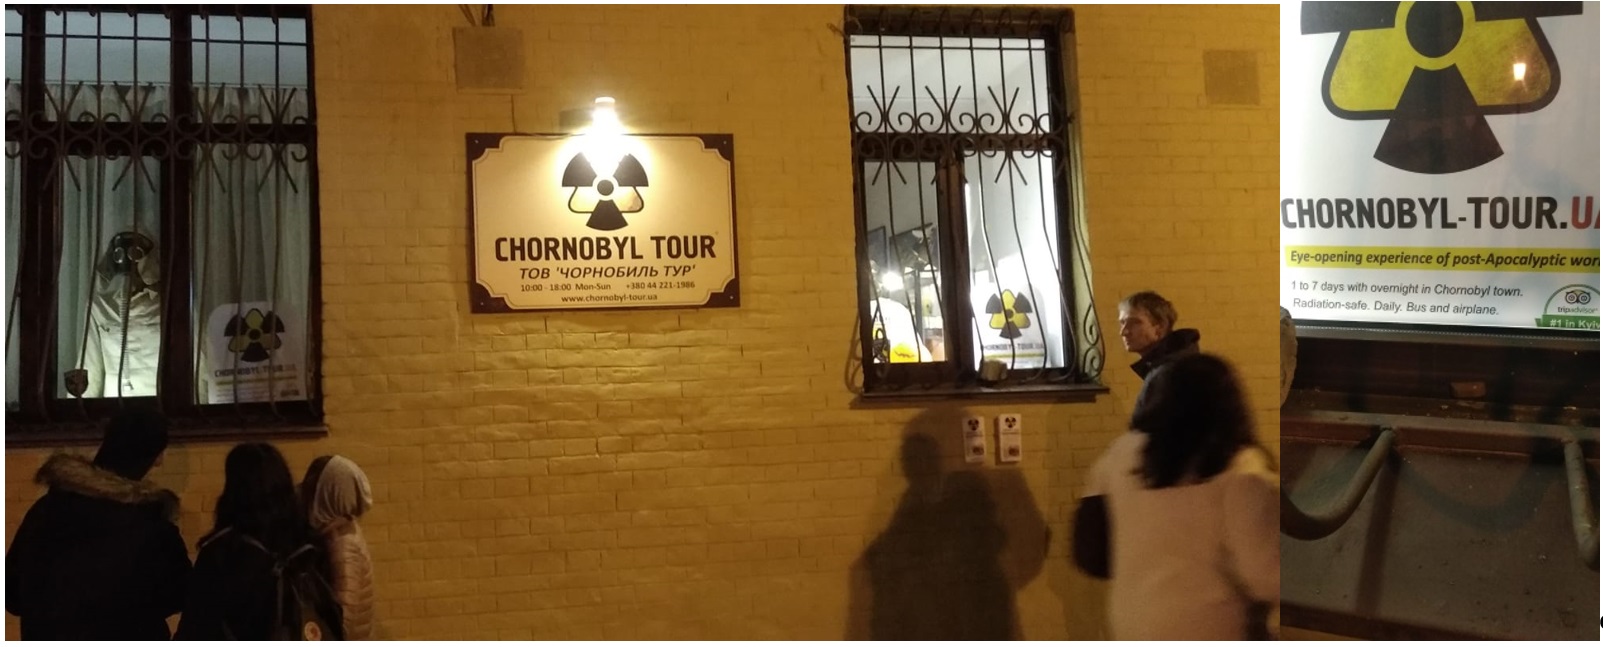 1 Chornobyl Tour.jpg